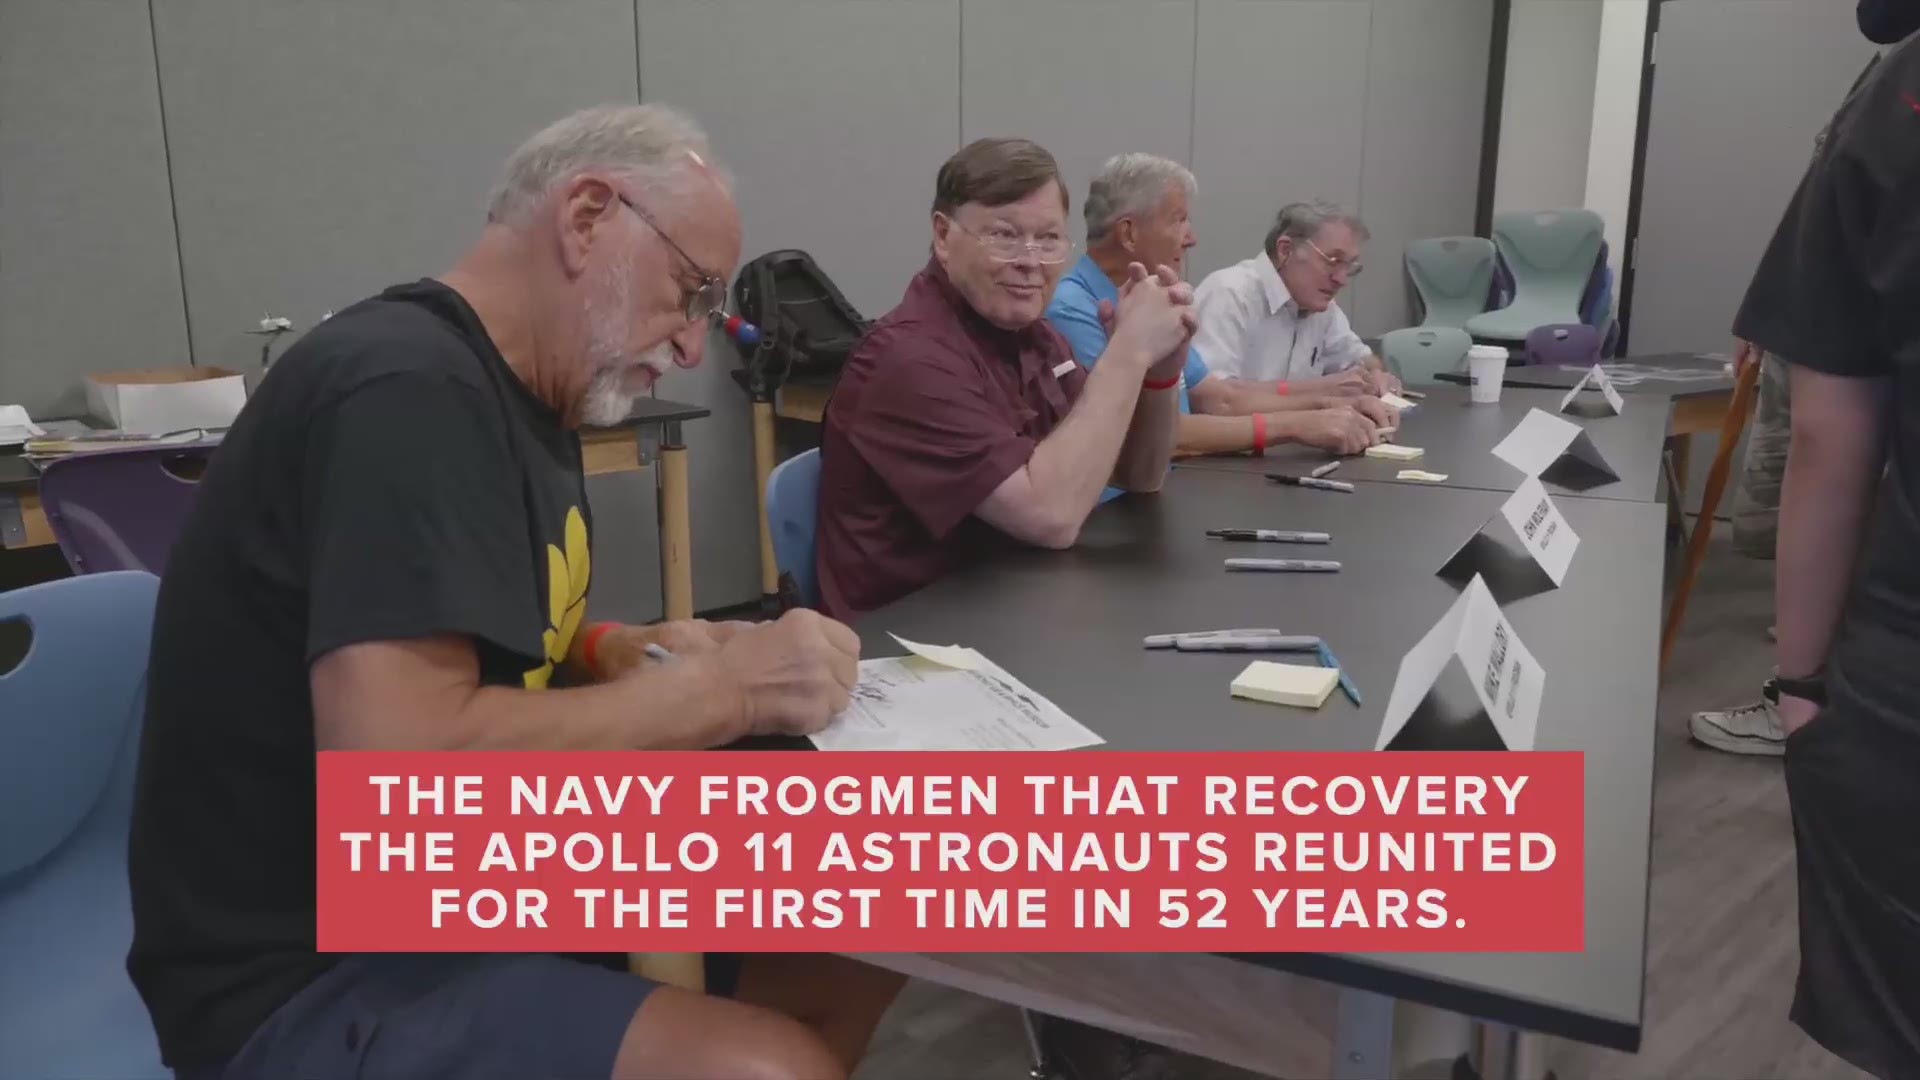 The reunion took place in Neil Armstrong’s hometown of Wapakoneta, Ohio.